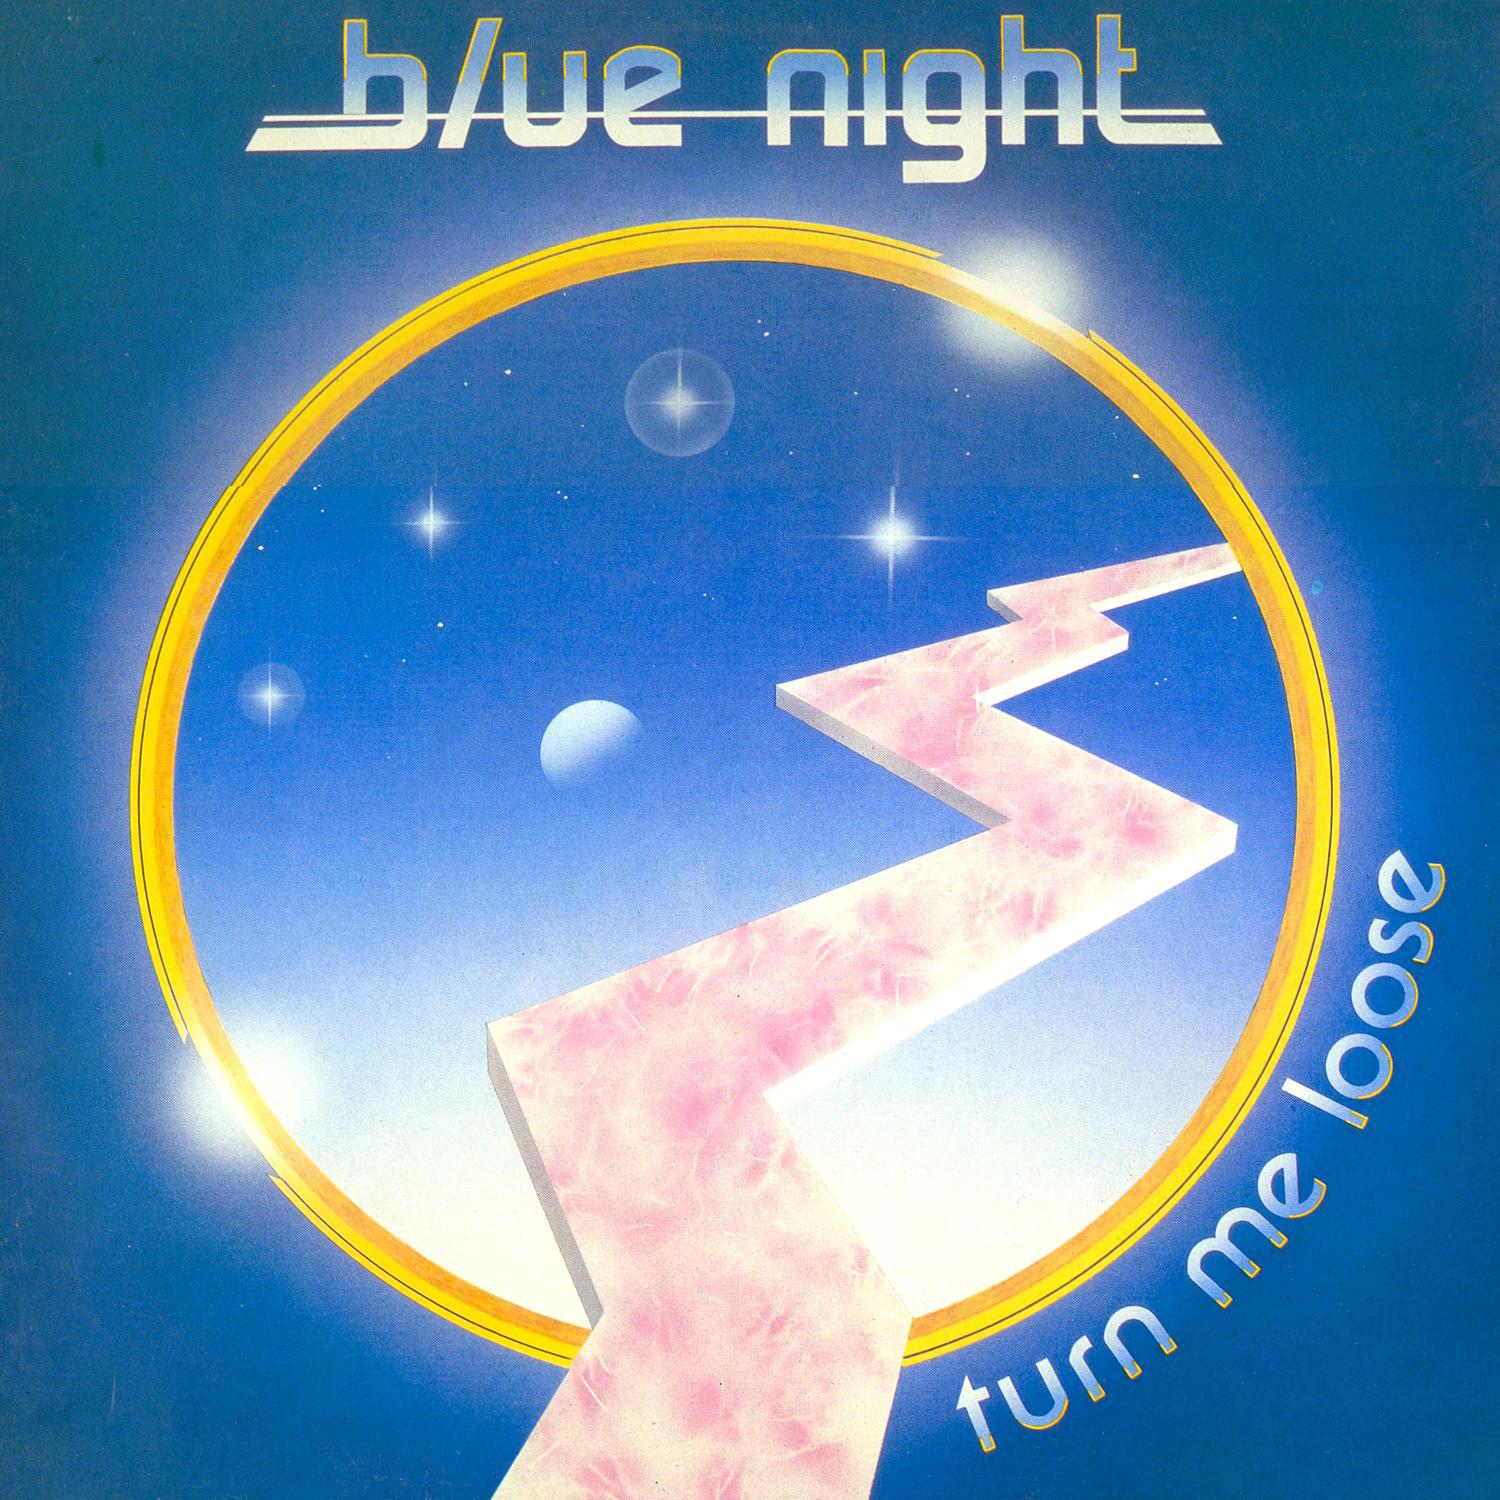 I lost my key last night. Bоhеmia Вluе Night. Blue Night Maniac (best record - BST - x061 (Limited Edition), Italy).